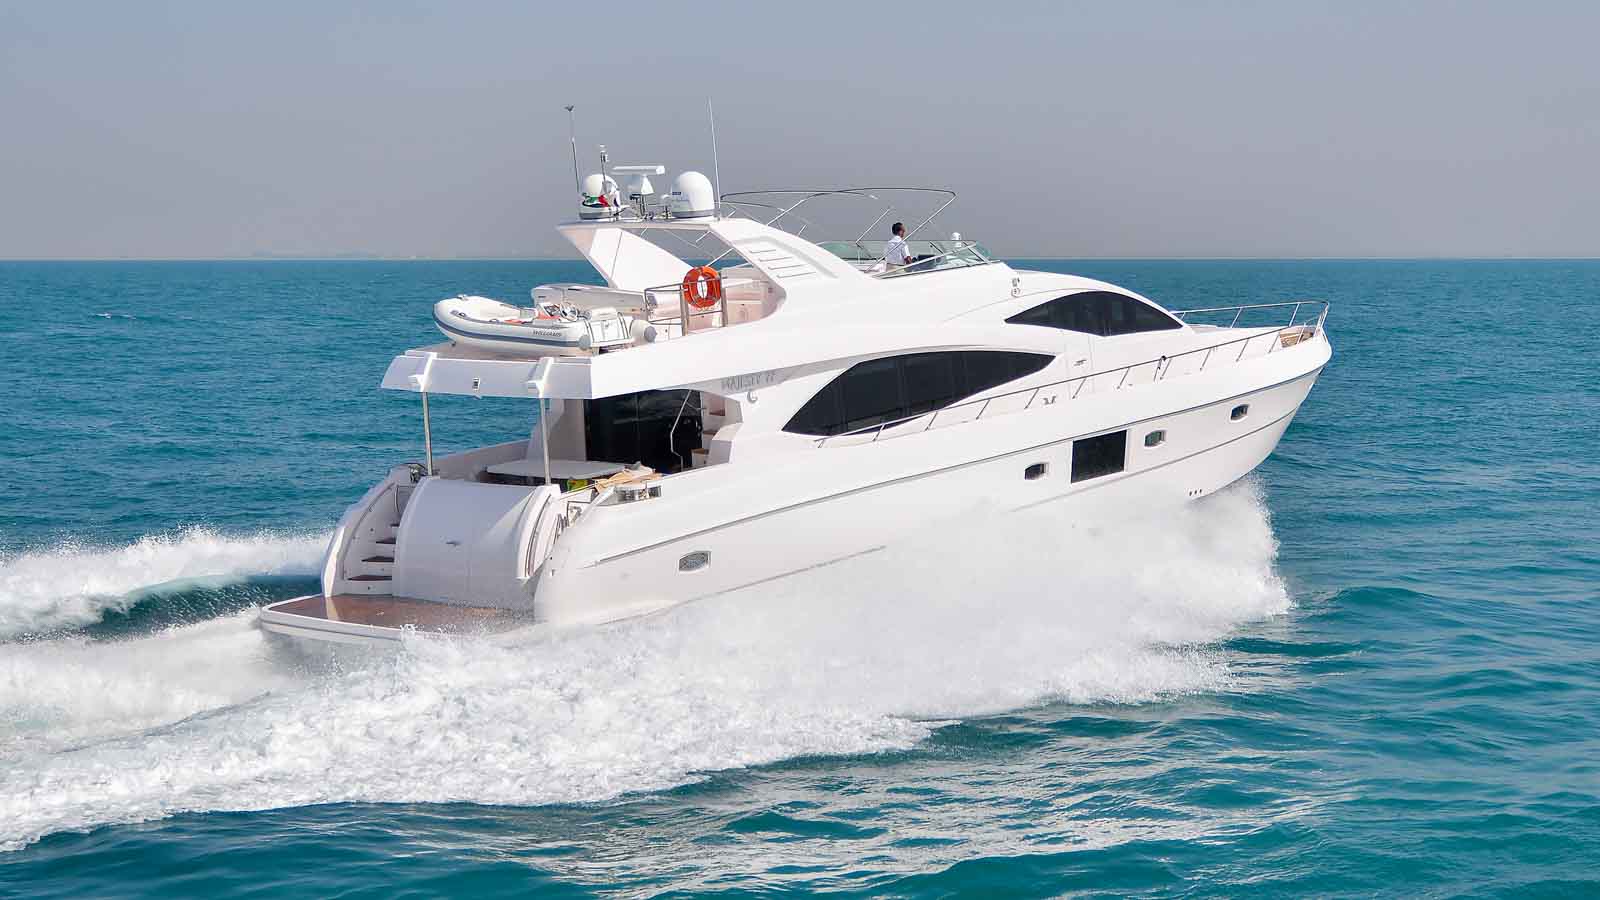 Explorer Goldeon Siren 77 ft. yacht with best price in Dubai